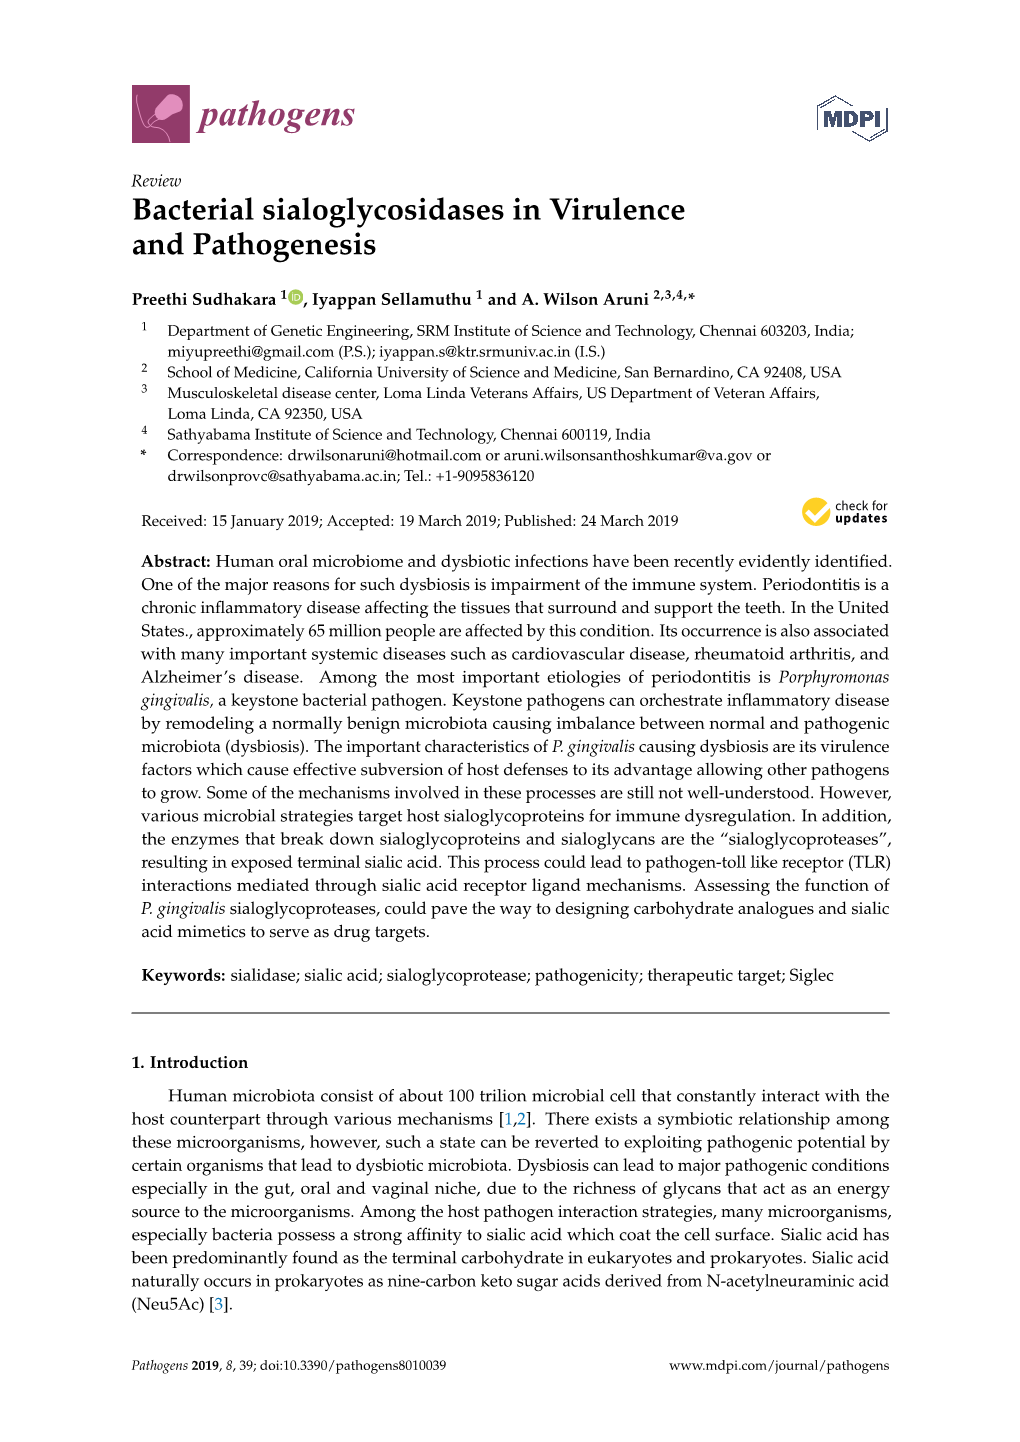 Bacterial Sialoglycosidases in Virulence and Pathogenesis